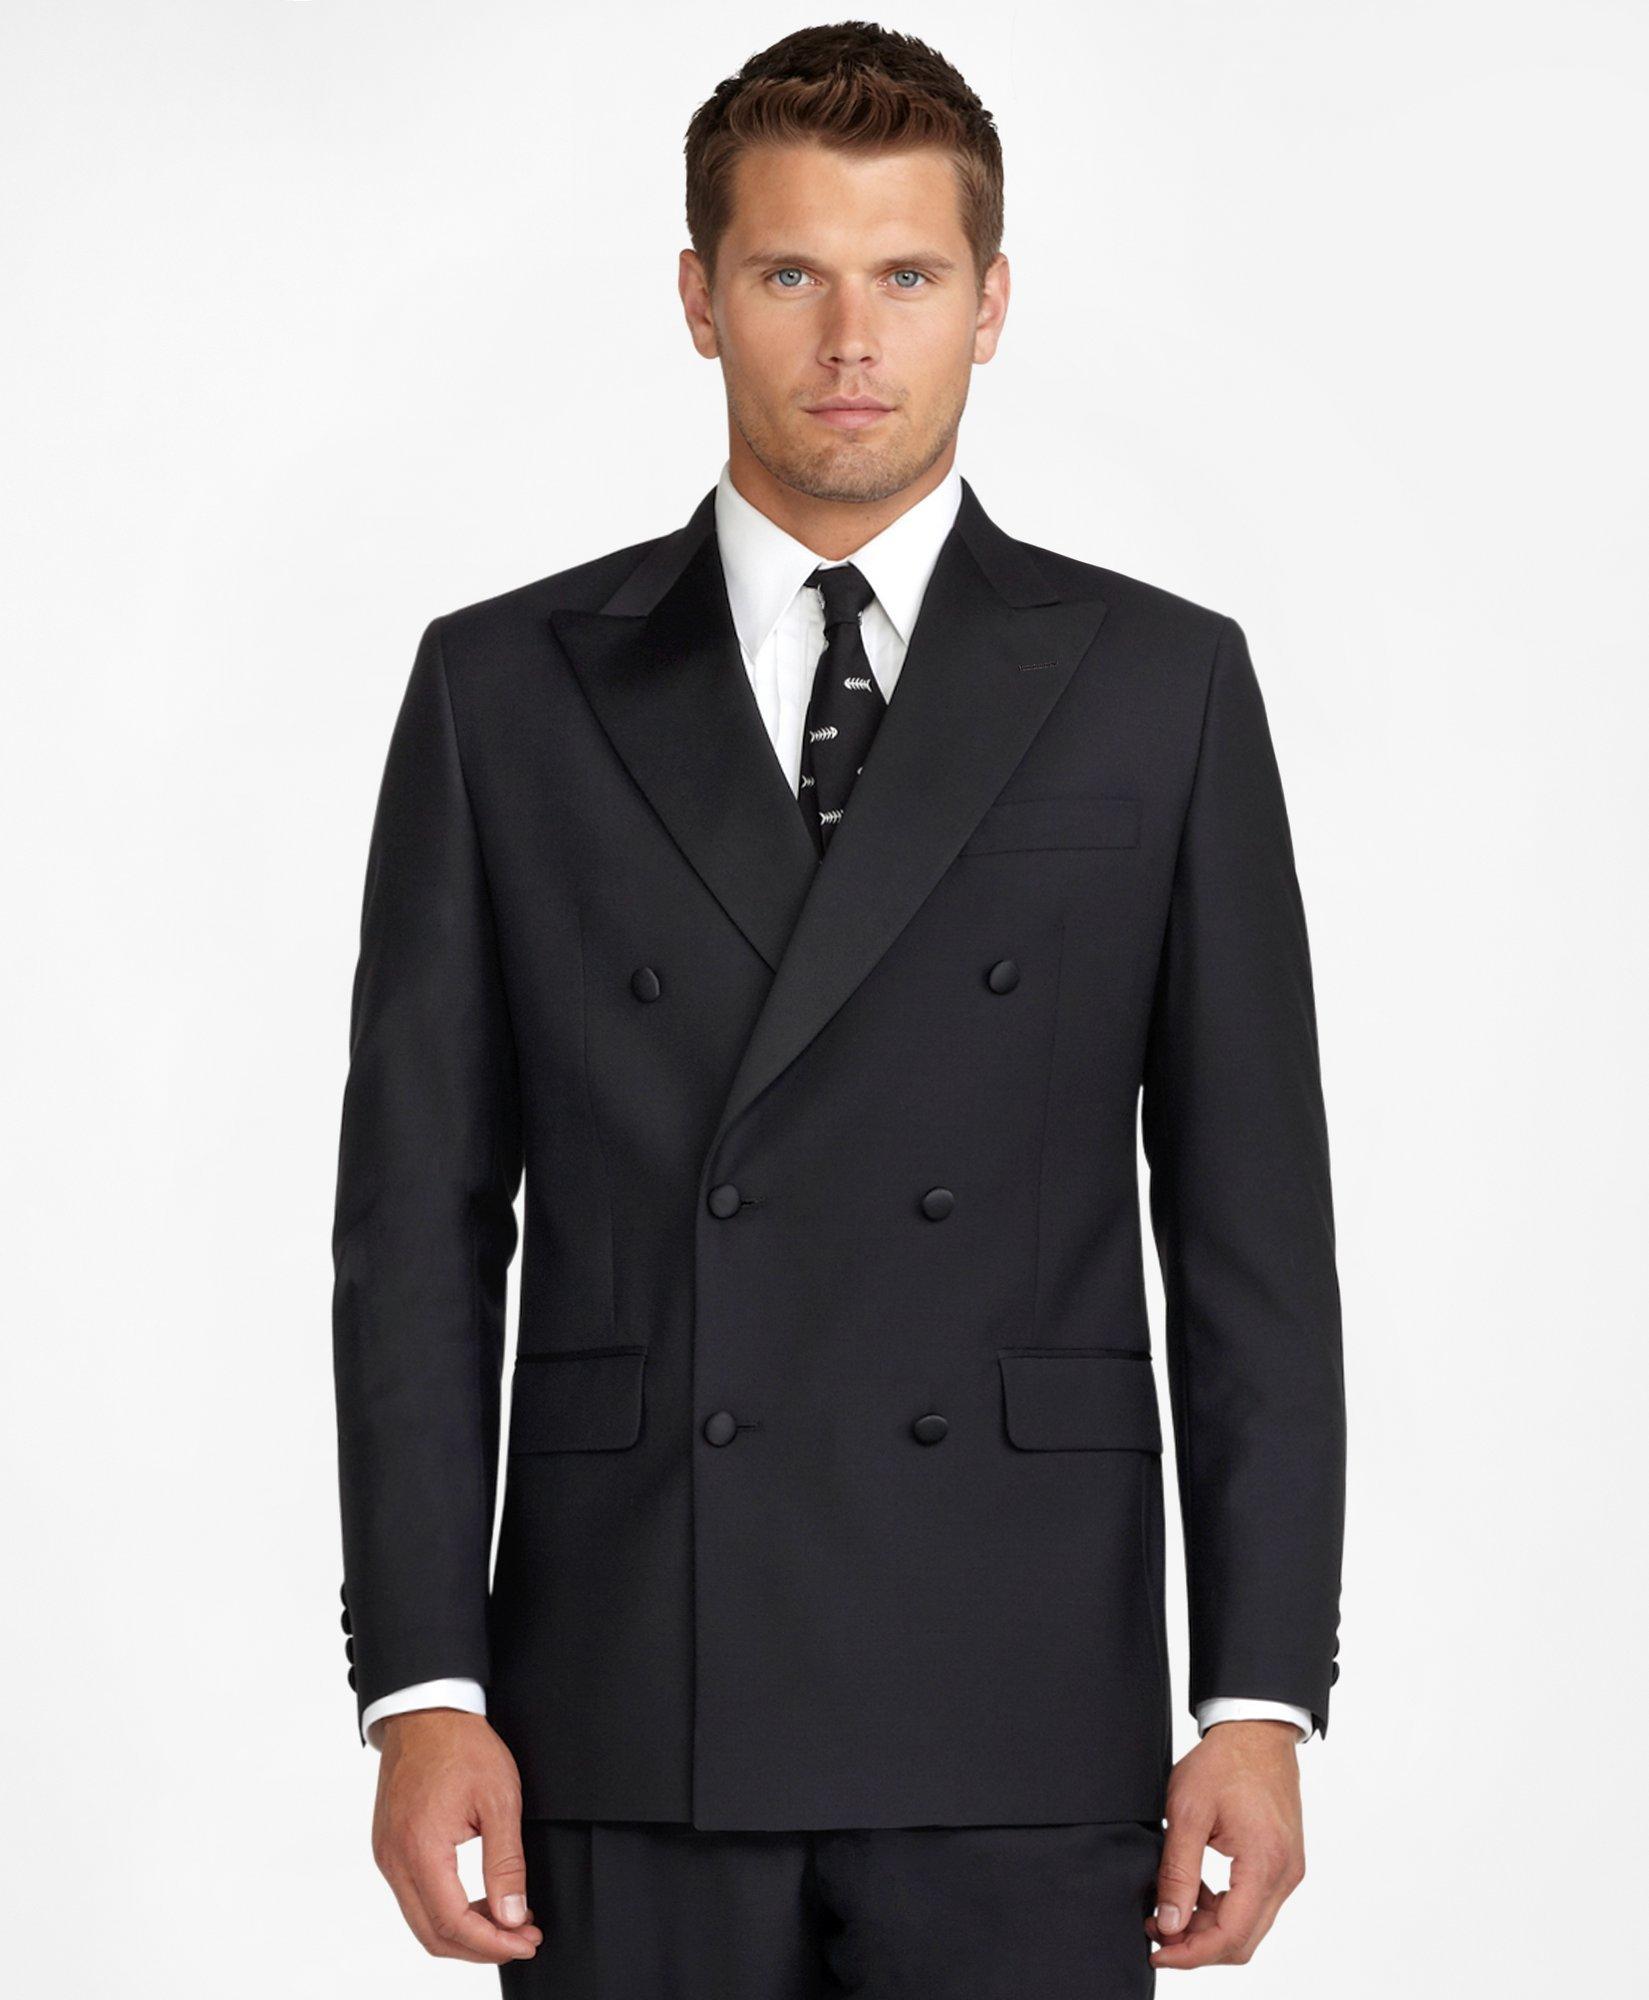 Men's Black Double-Breasted Tuxedo Jacket | Brooks Brothers